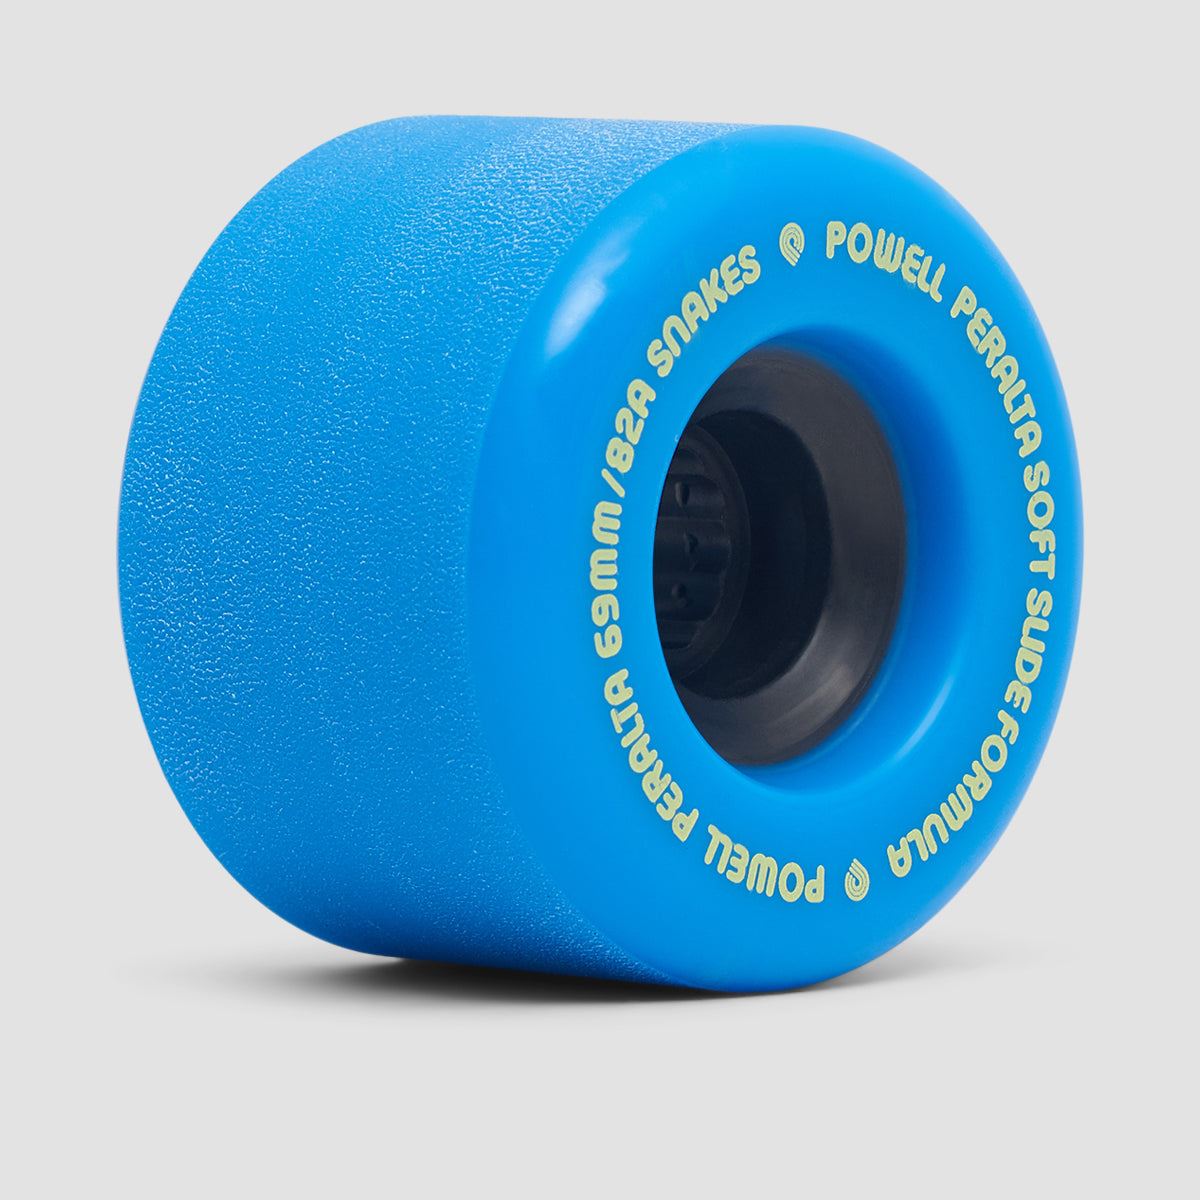 Powell Peralta Snakes 82A Soft Slide Skateboard Wheels Blue 69mm